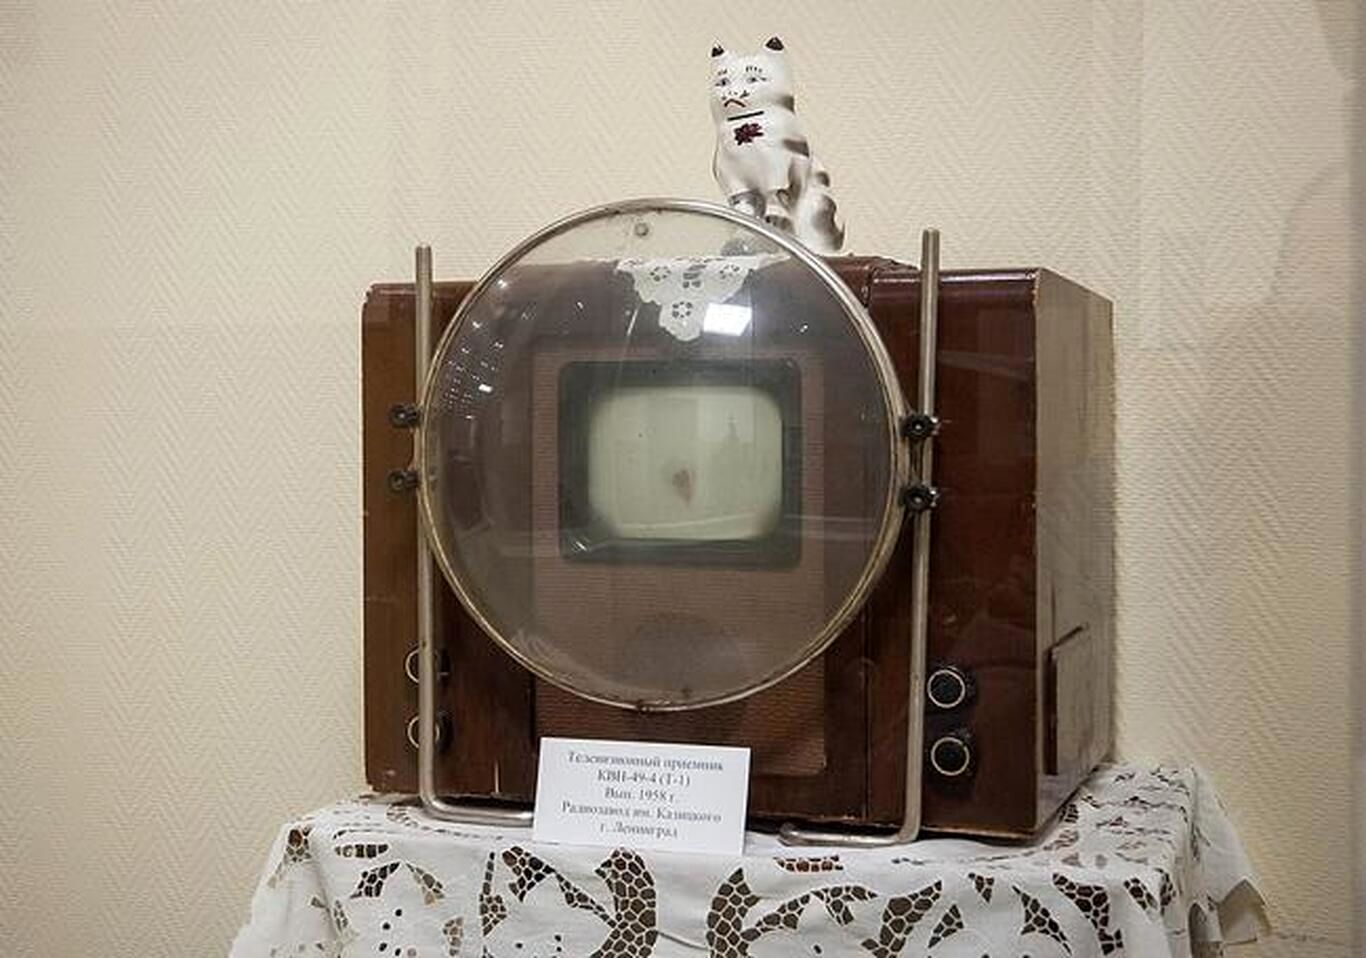 عکس | خط تولید تلویزیون رنگی در شوروی سابق!